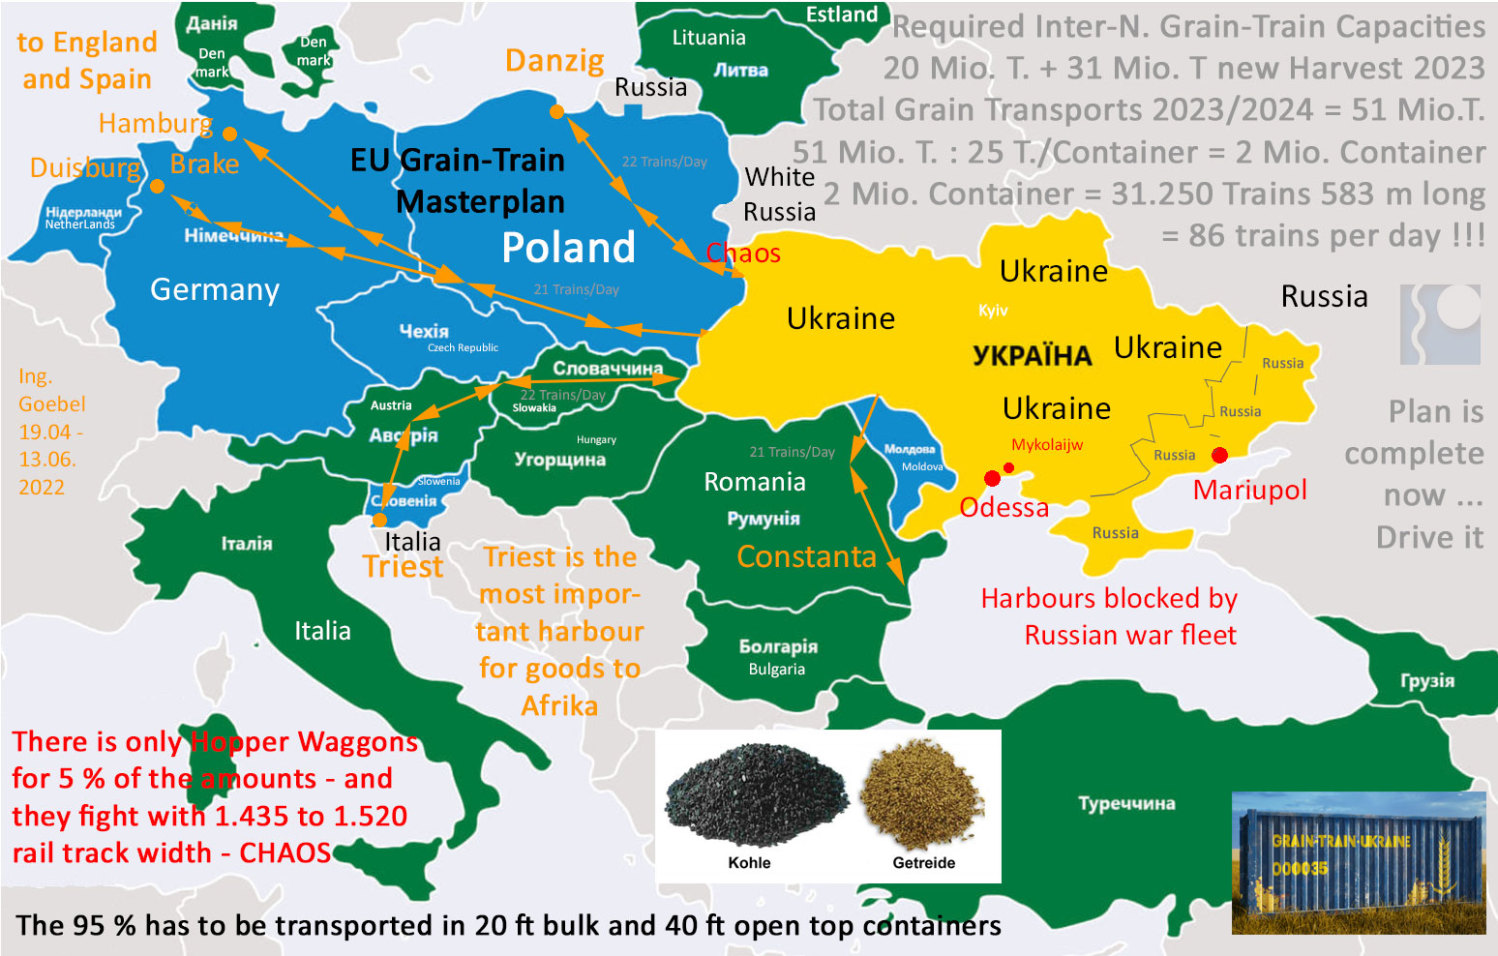 Original Grain-Trains-Ukraine Map by Ing. Goebel - proposal to EU